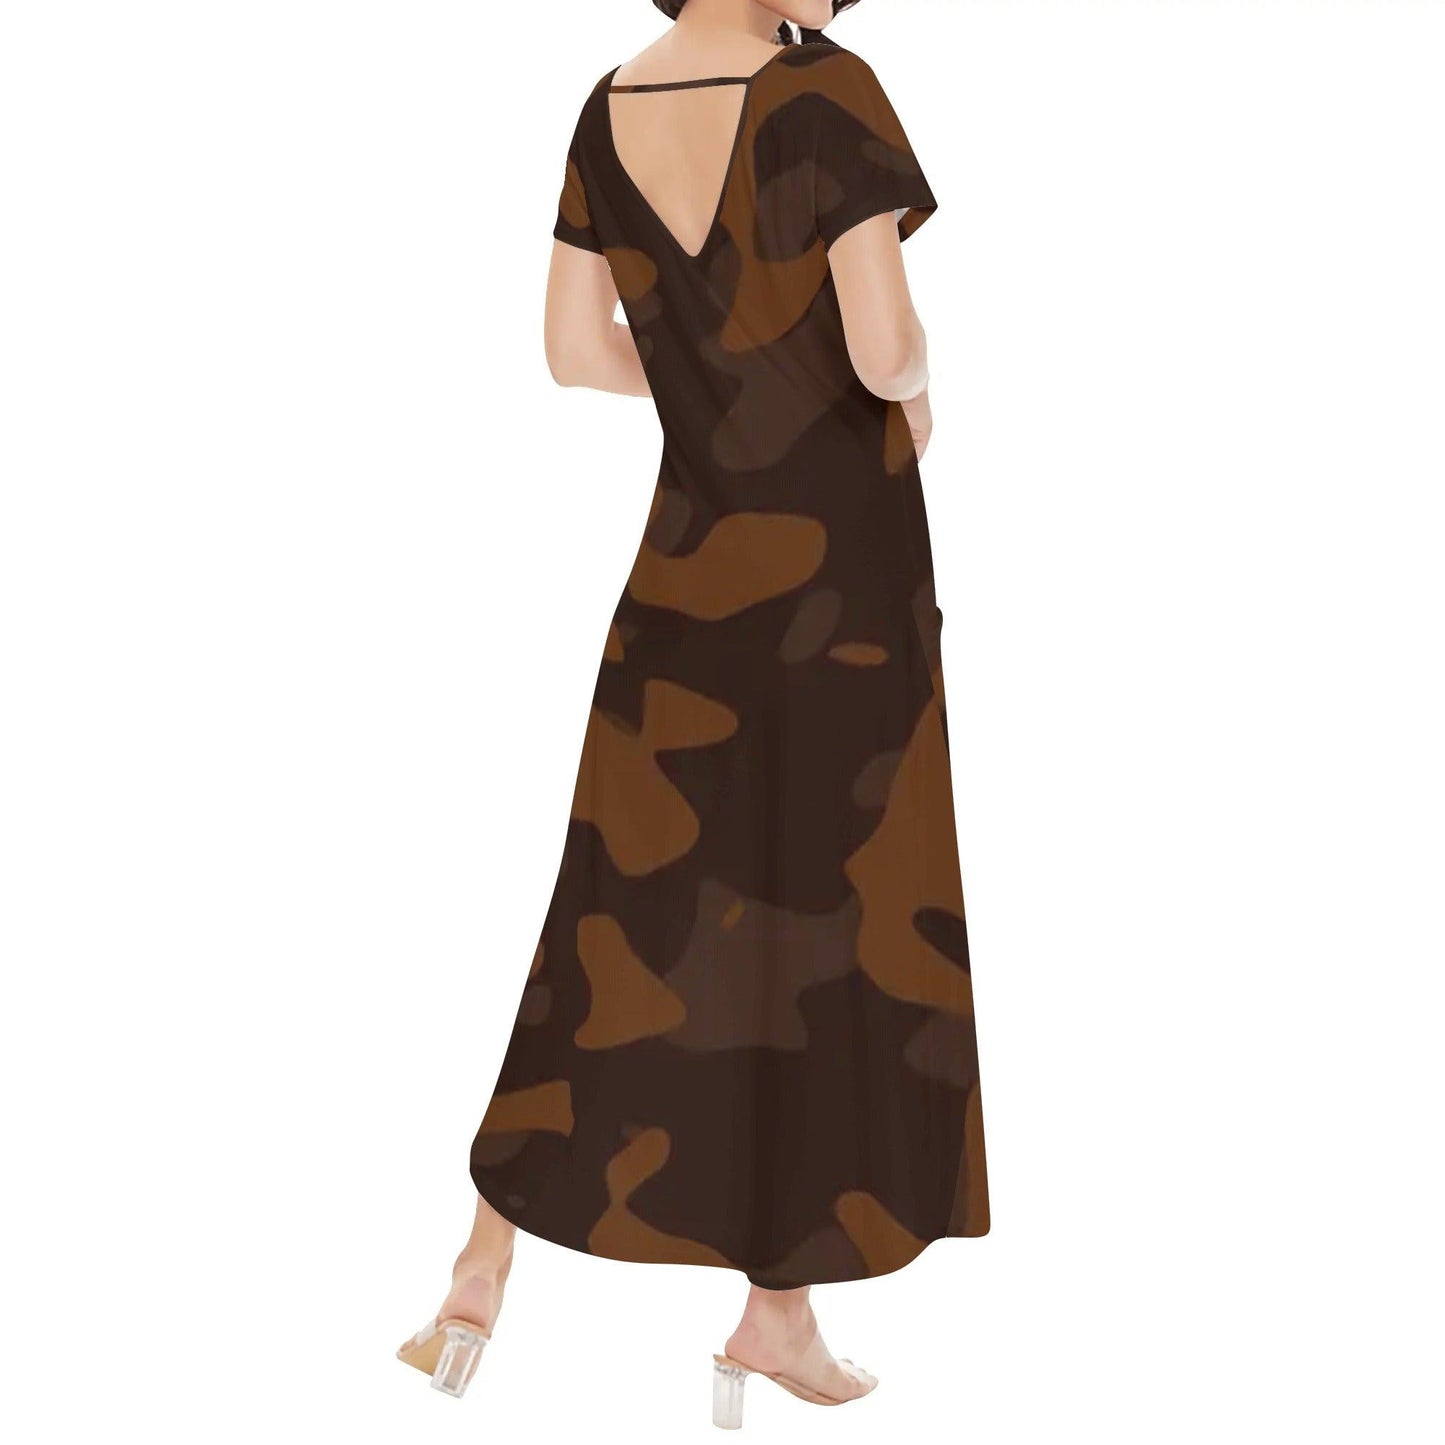 Braunes Camouflage kurzärmliges drapiertes Kleid drapiertes Kleid 63.99 Braun, Camouflage, drapiert, kleid, kleinärmlig JLR Design